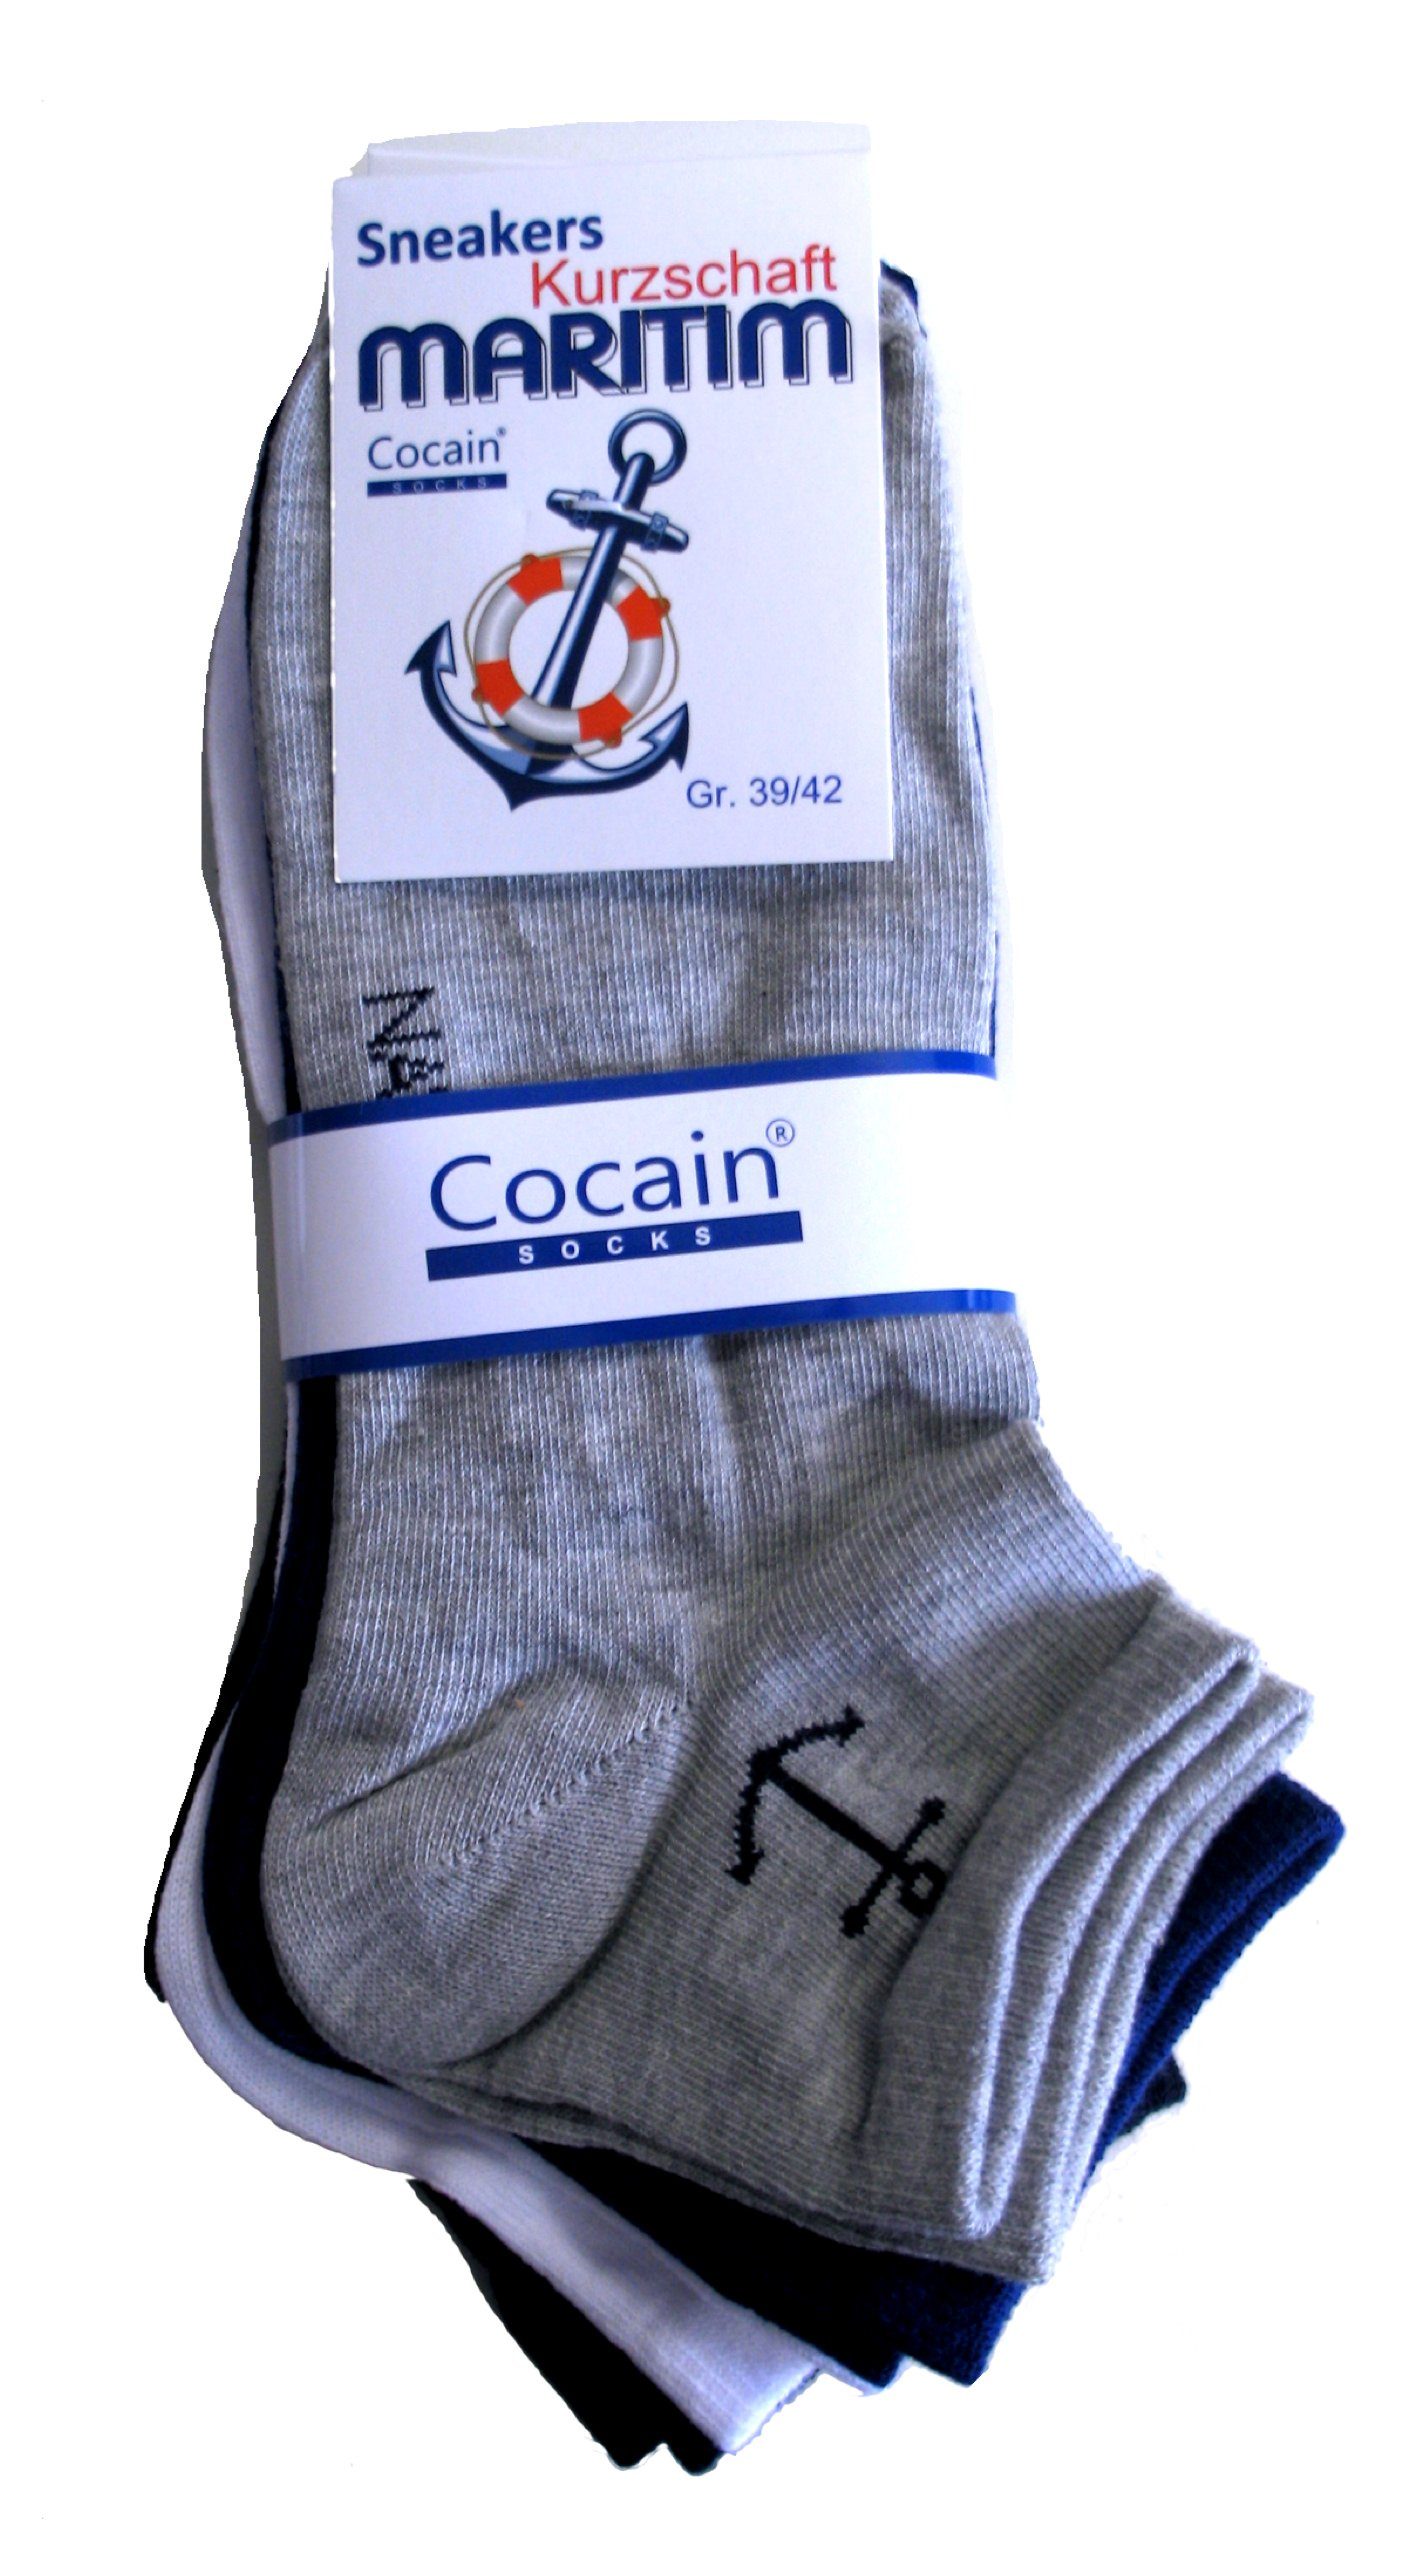 Cocain underwear Sneakersocken 8 Paar Socken Maritim - für Modelle Söckchen verschiedene Füsslinge (8-Paar) Baumwolle Herren Sneaker